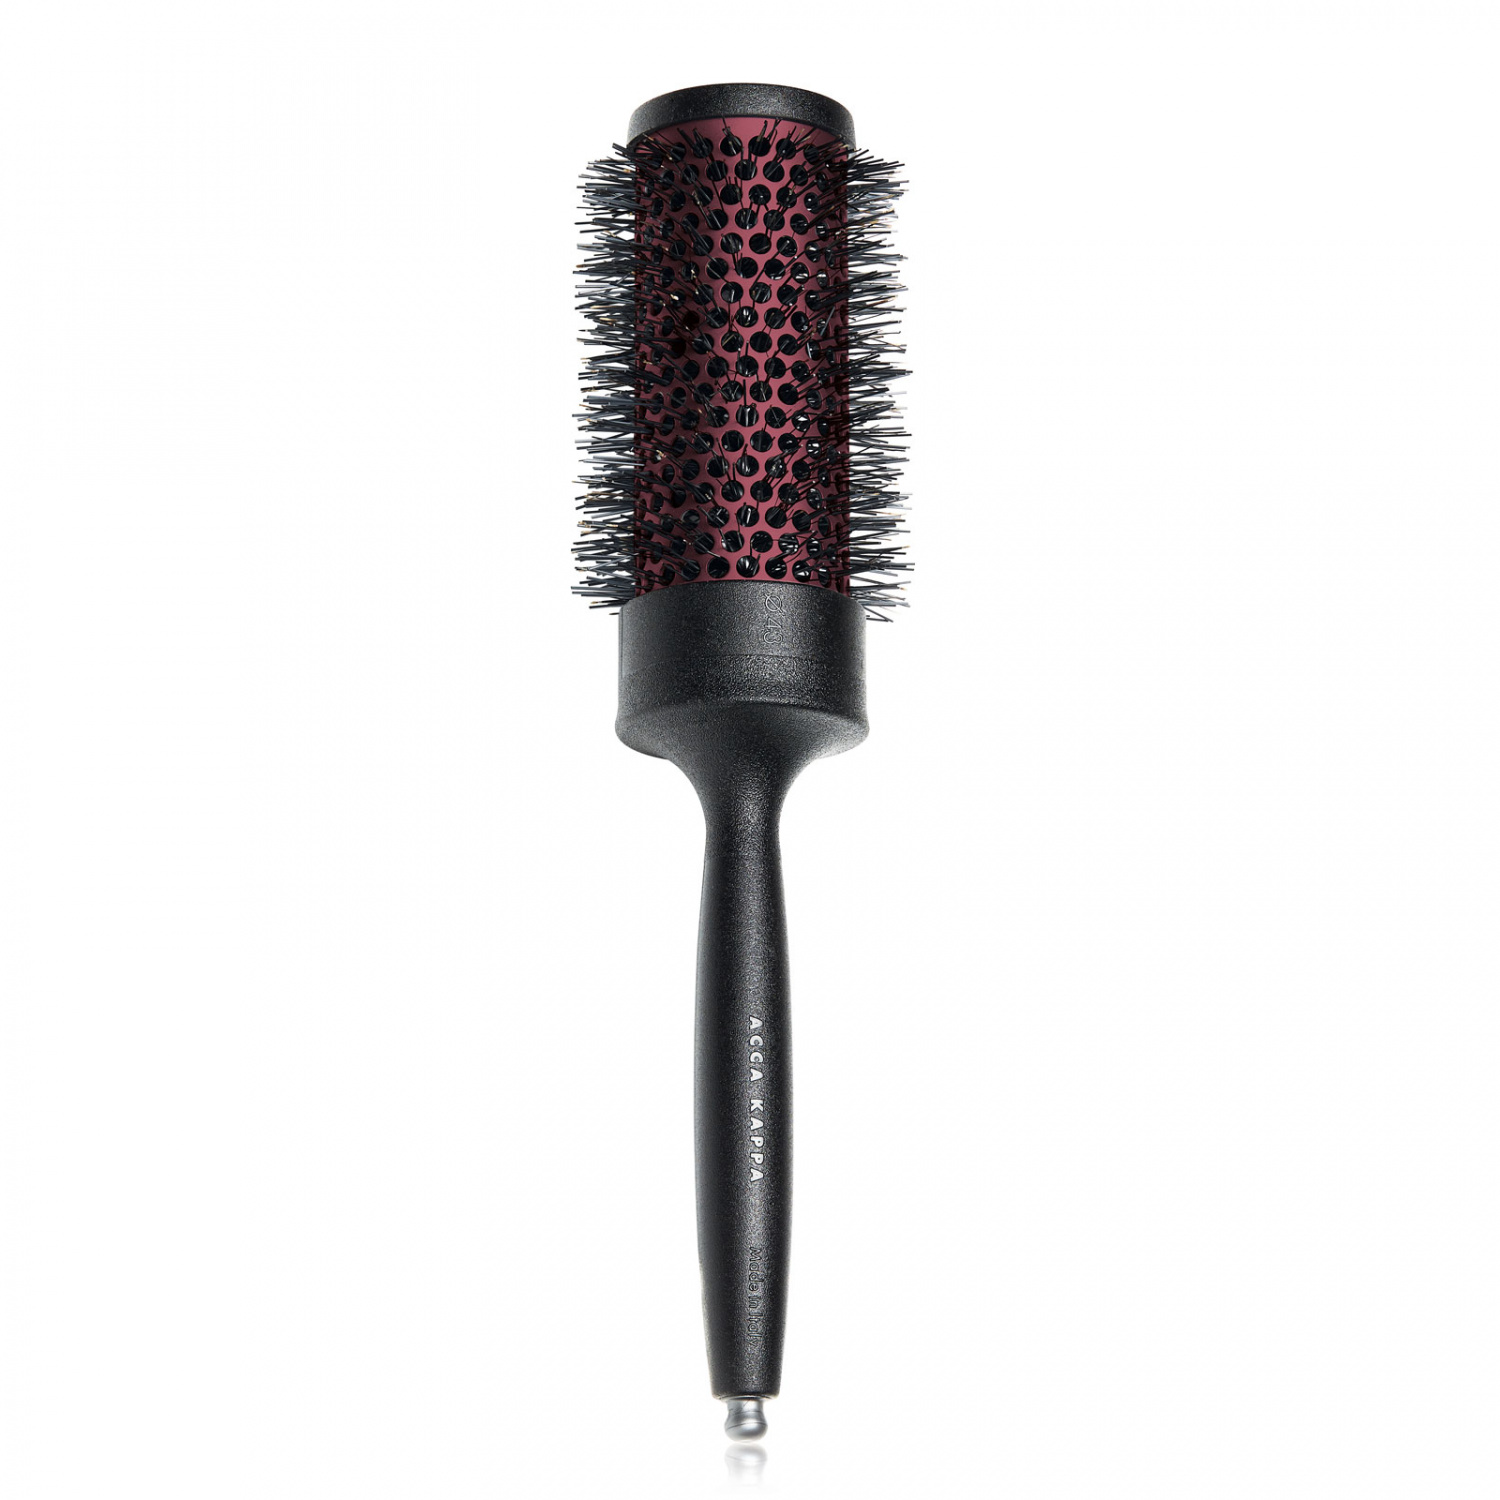 Acca Kappa Hairbrush 43mm - интернет-магазин профессиональной косметики Spadream, изображение 43859